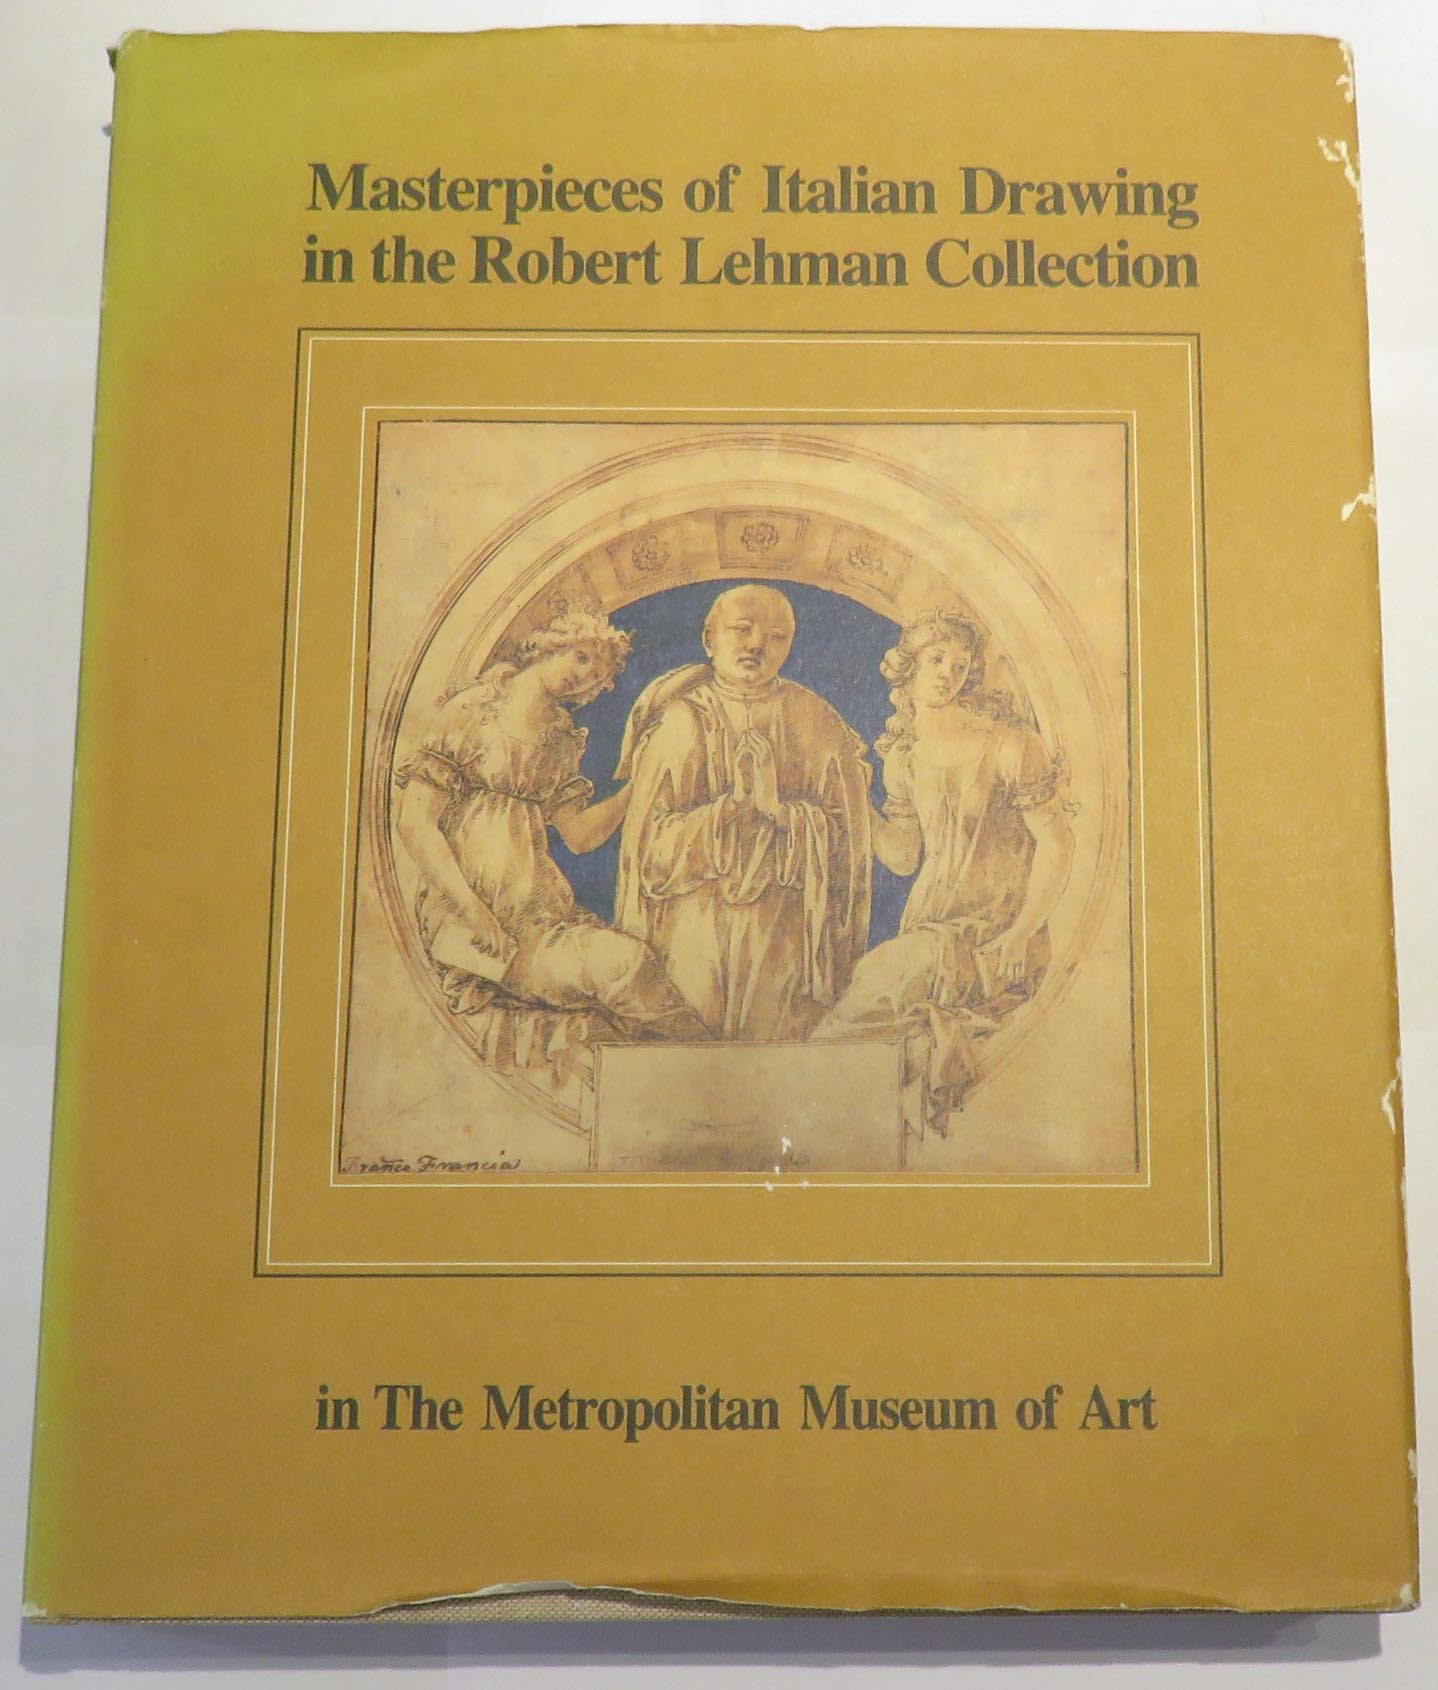 Masterpieces of Italian Drawing in the Robert Lehman Collection. The Metropolitan Museum of Art 